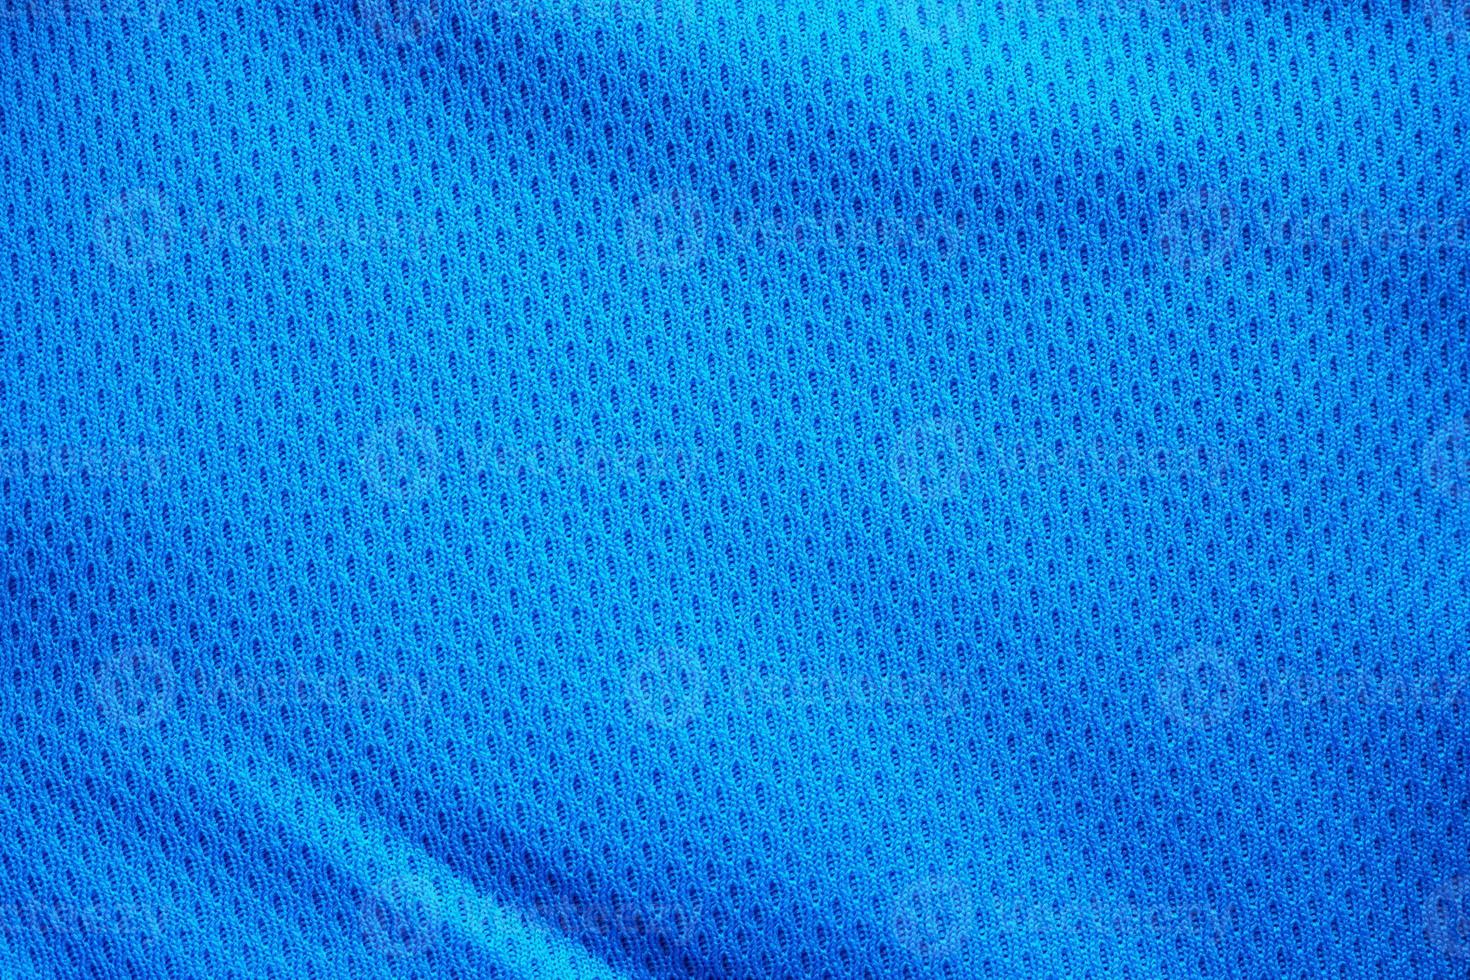 blauwe stof sportkleding voetbaltrui met luchtgaas textuur achtergrond foto